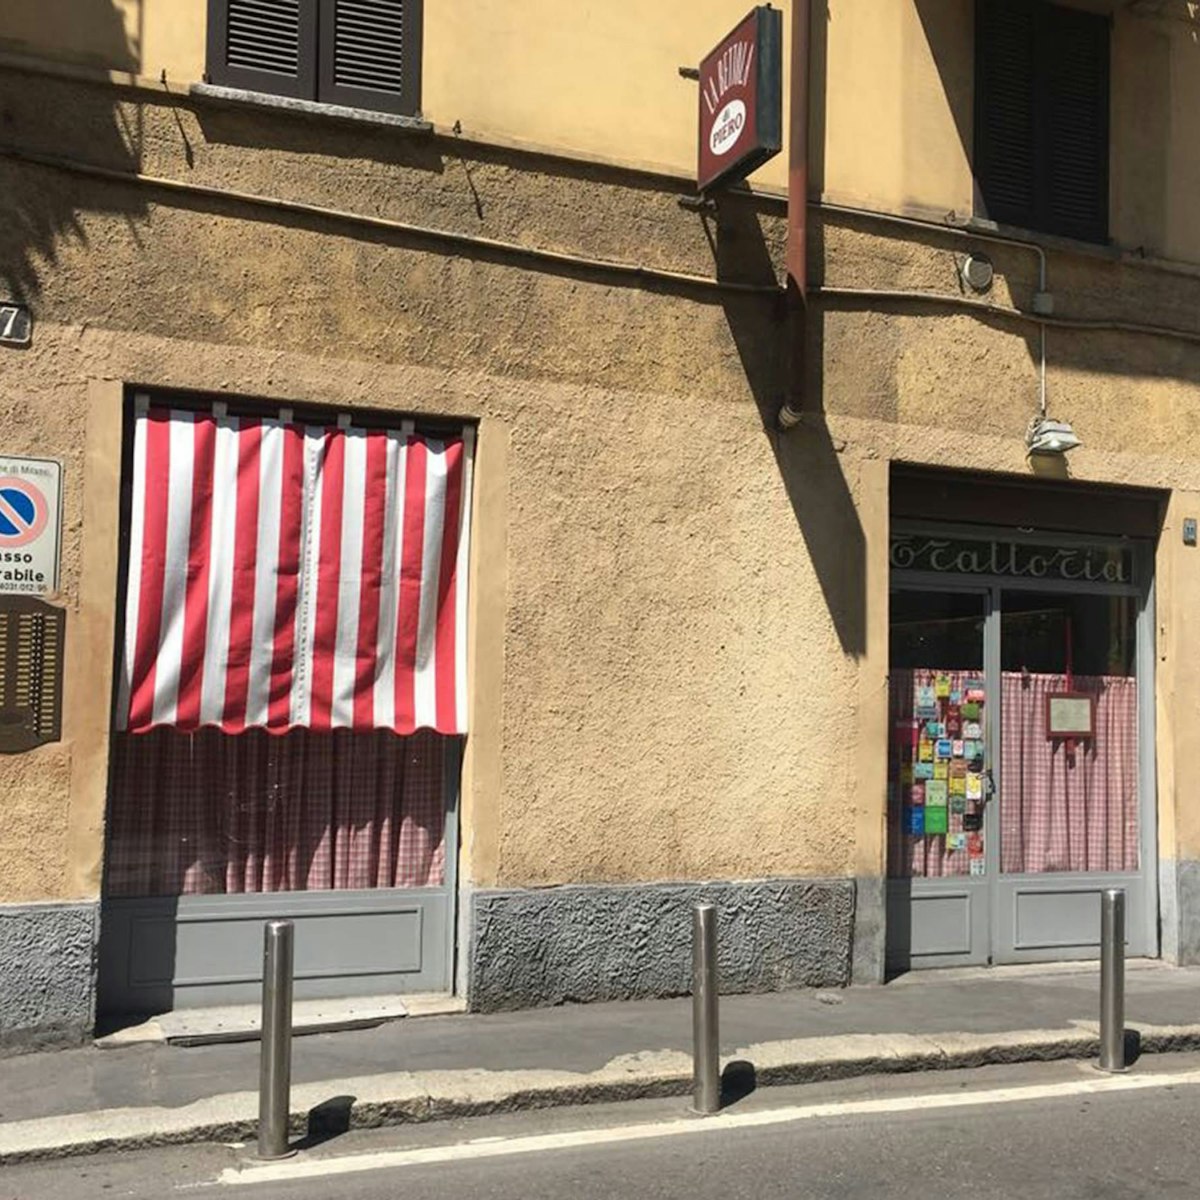 The La Bettola di Piero restaurant exterior